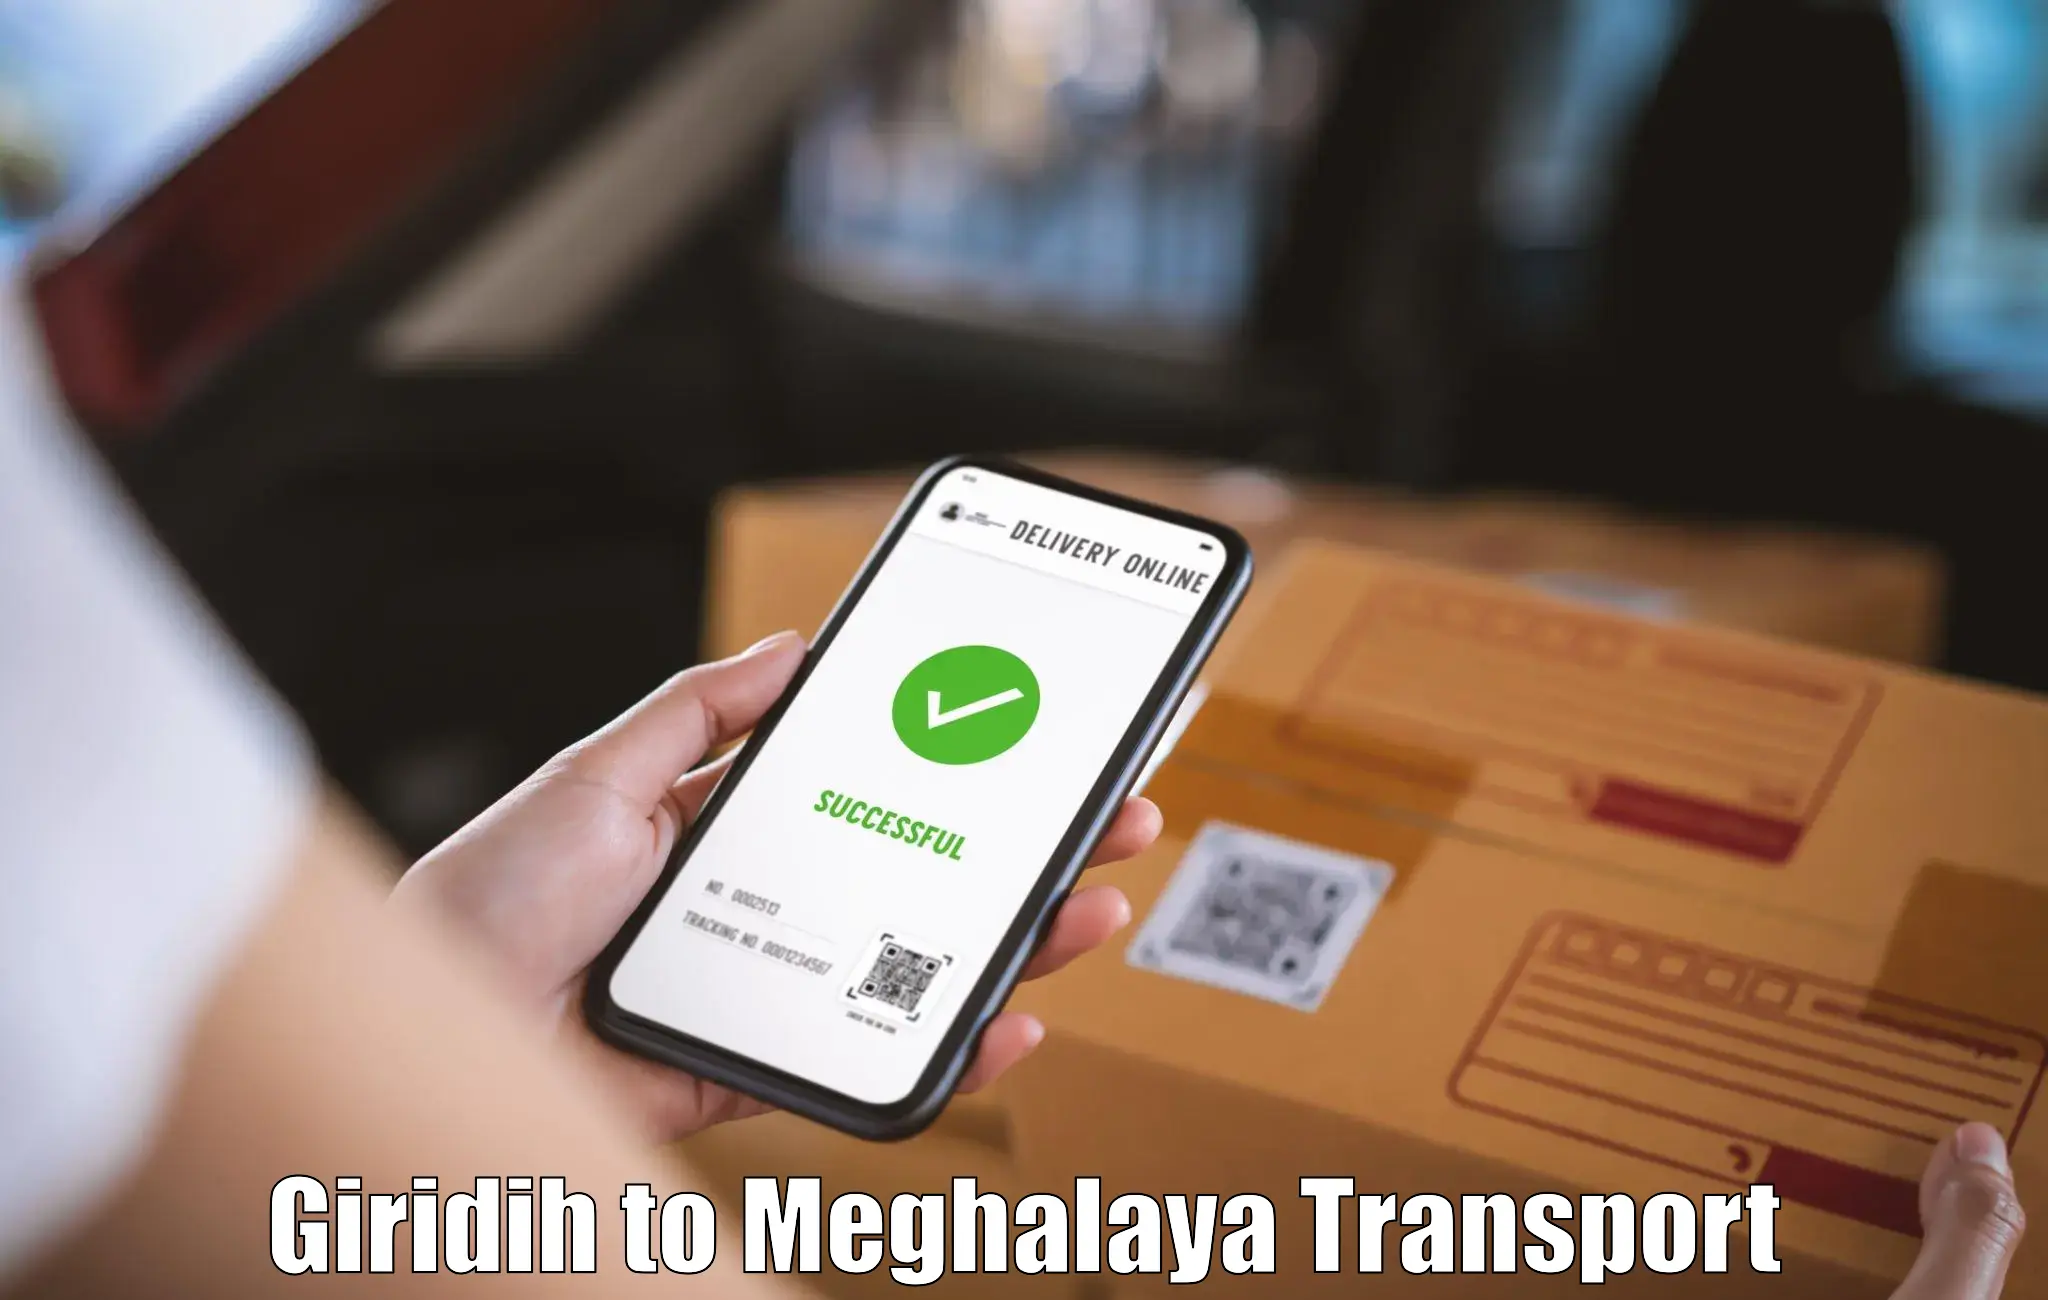 Goods delivery service Giridih to Meghalaya